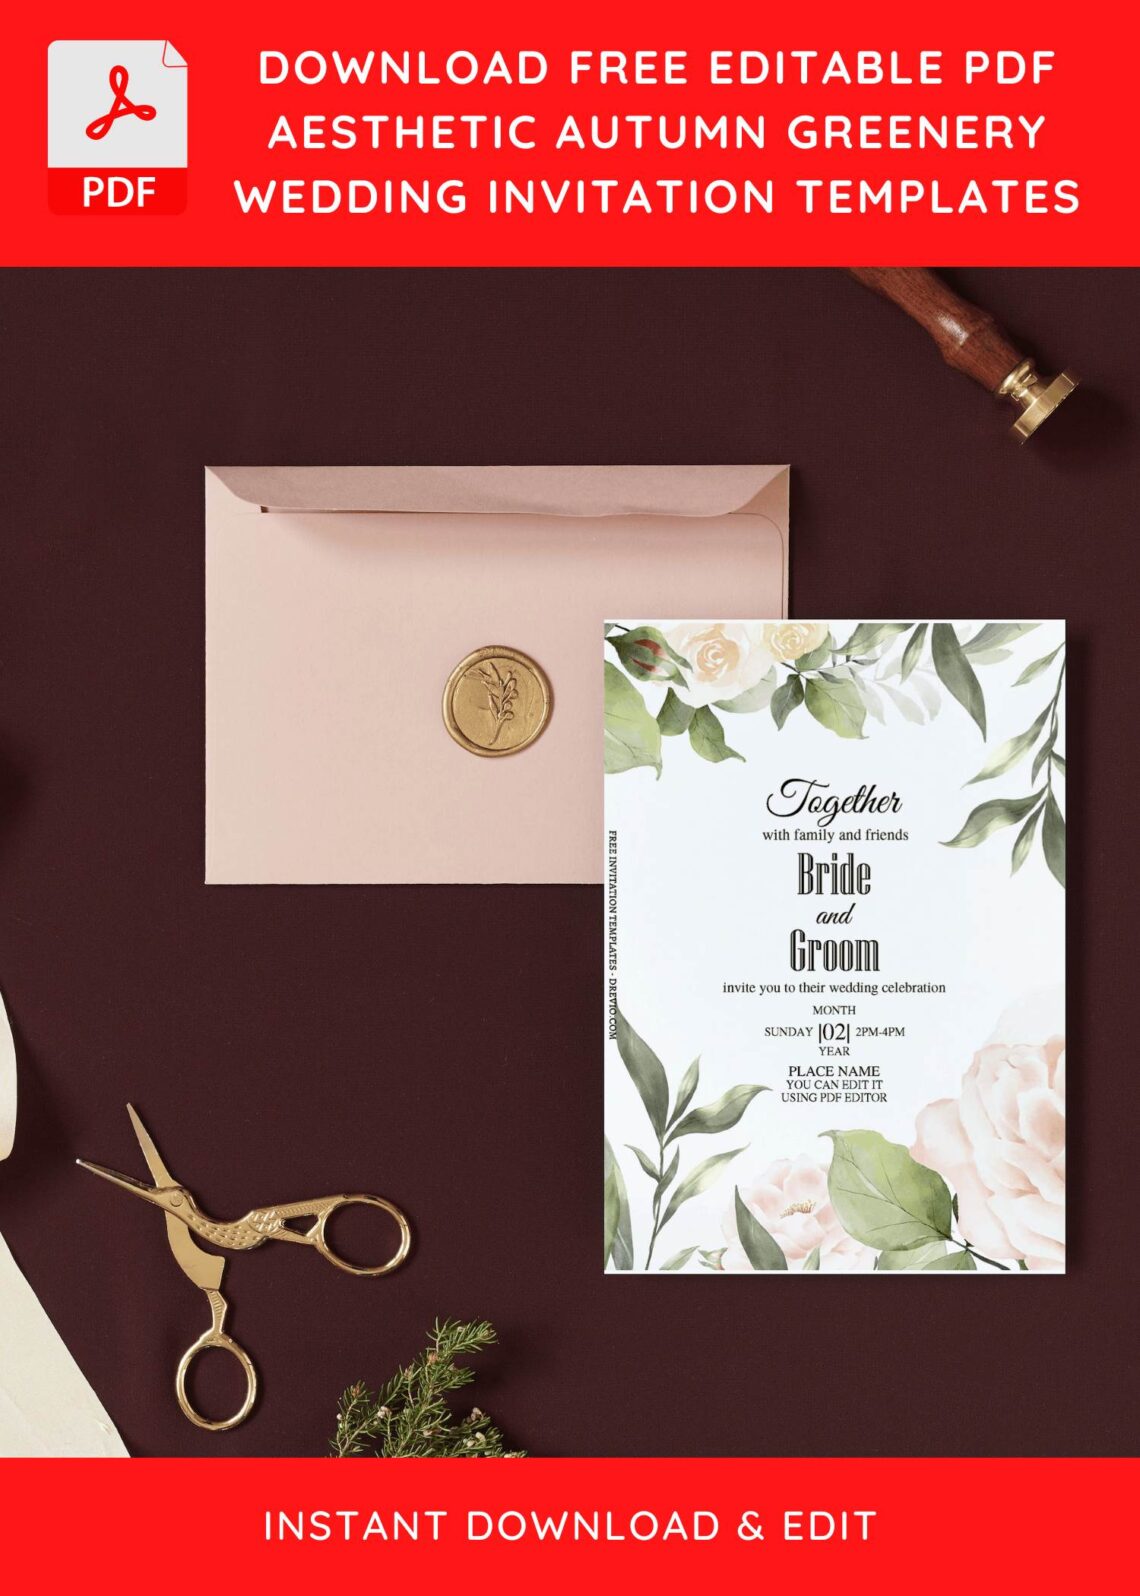 (Free Editable PDF) Autumn Floral And Greenery Wedding Invitation Templates I